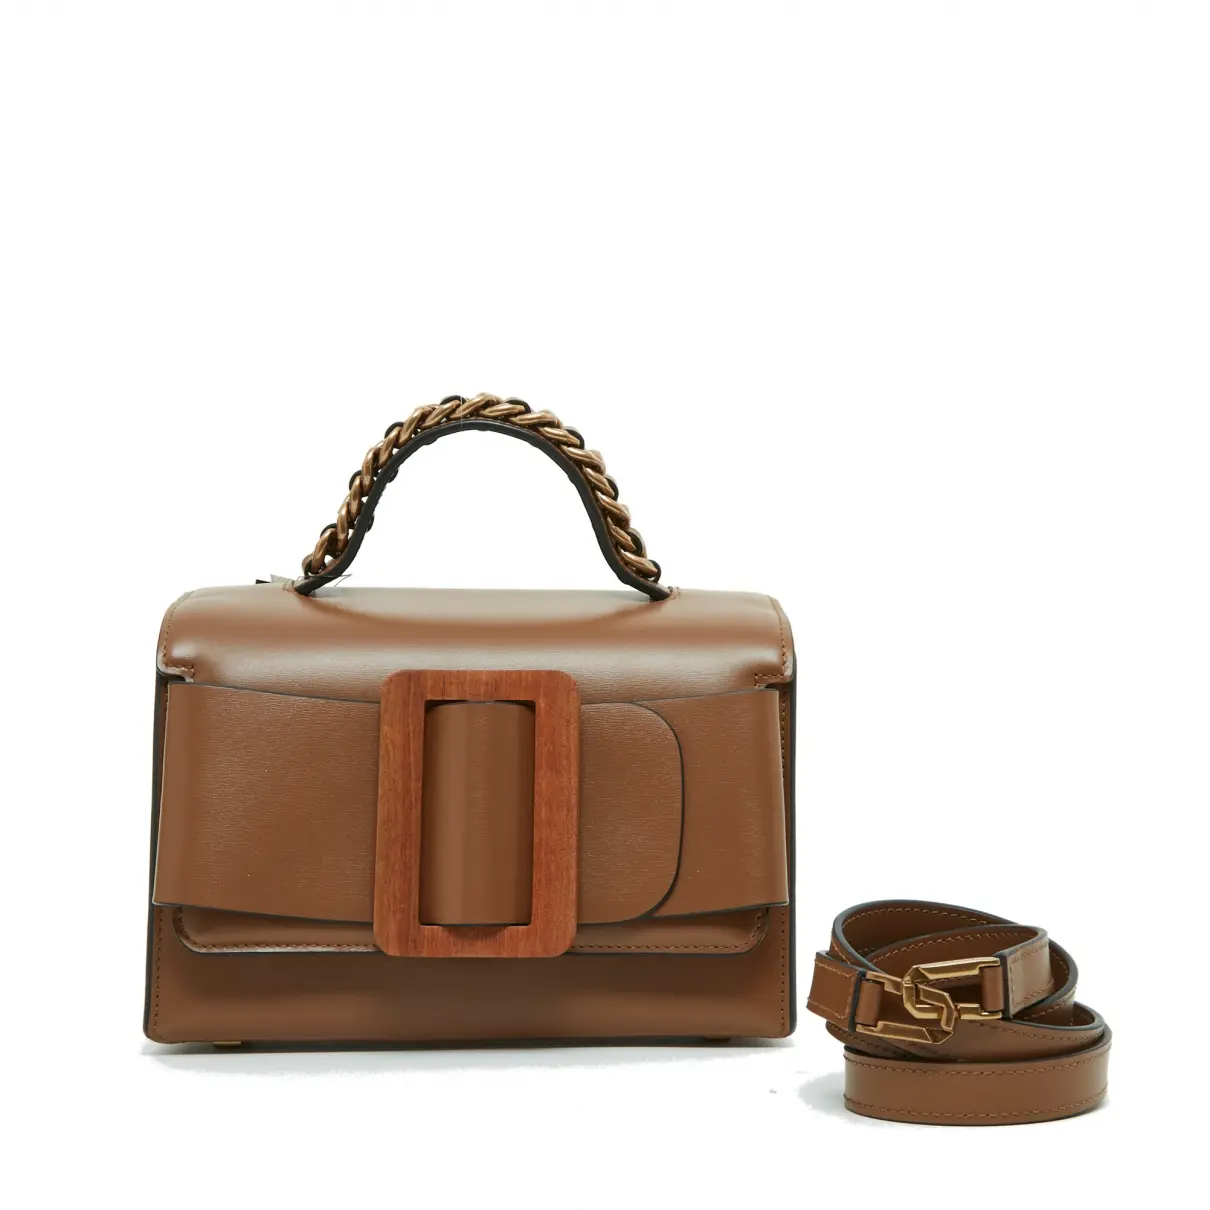 Fred leather handbag